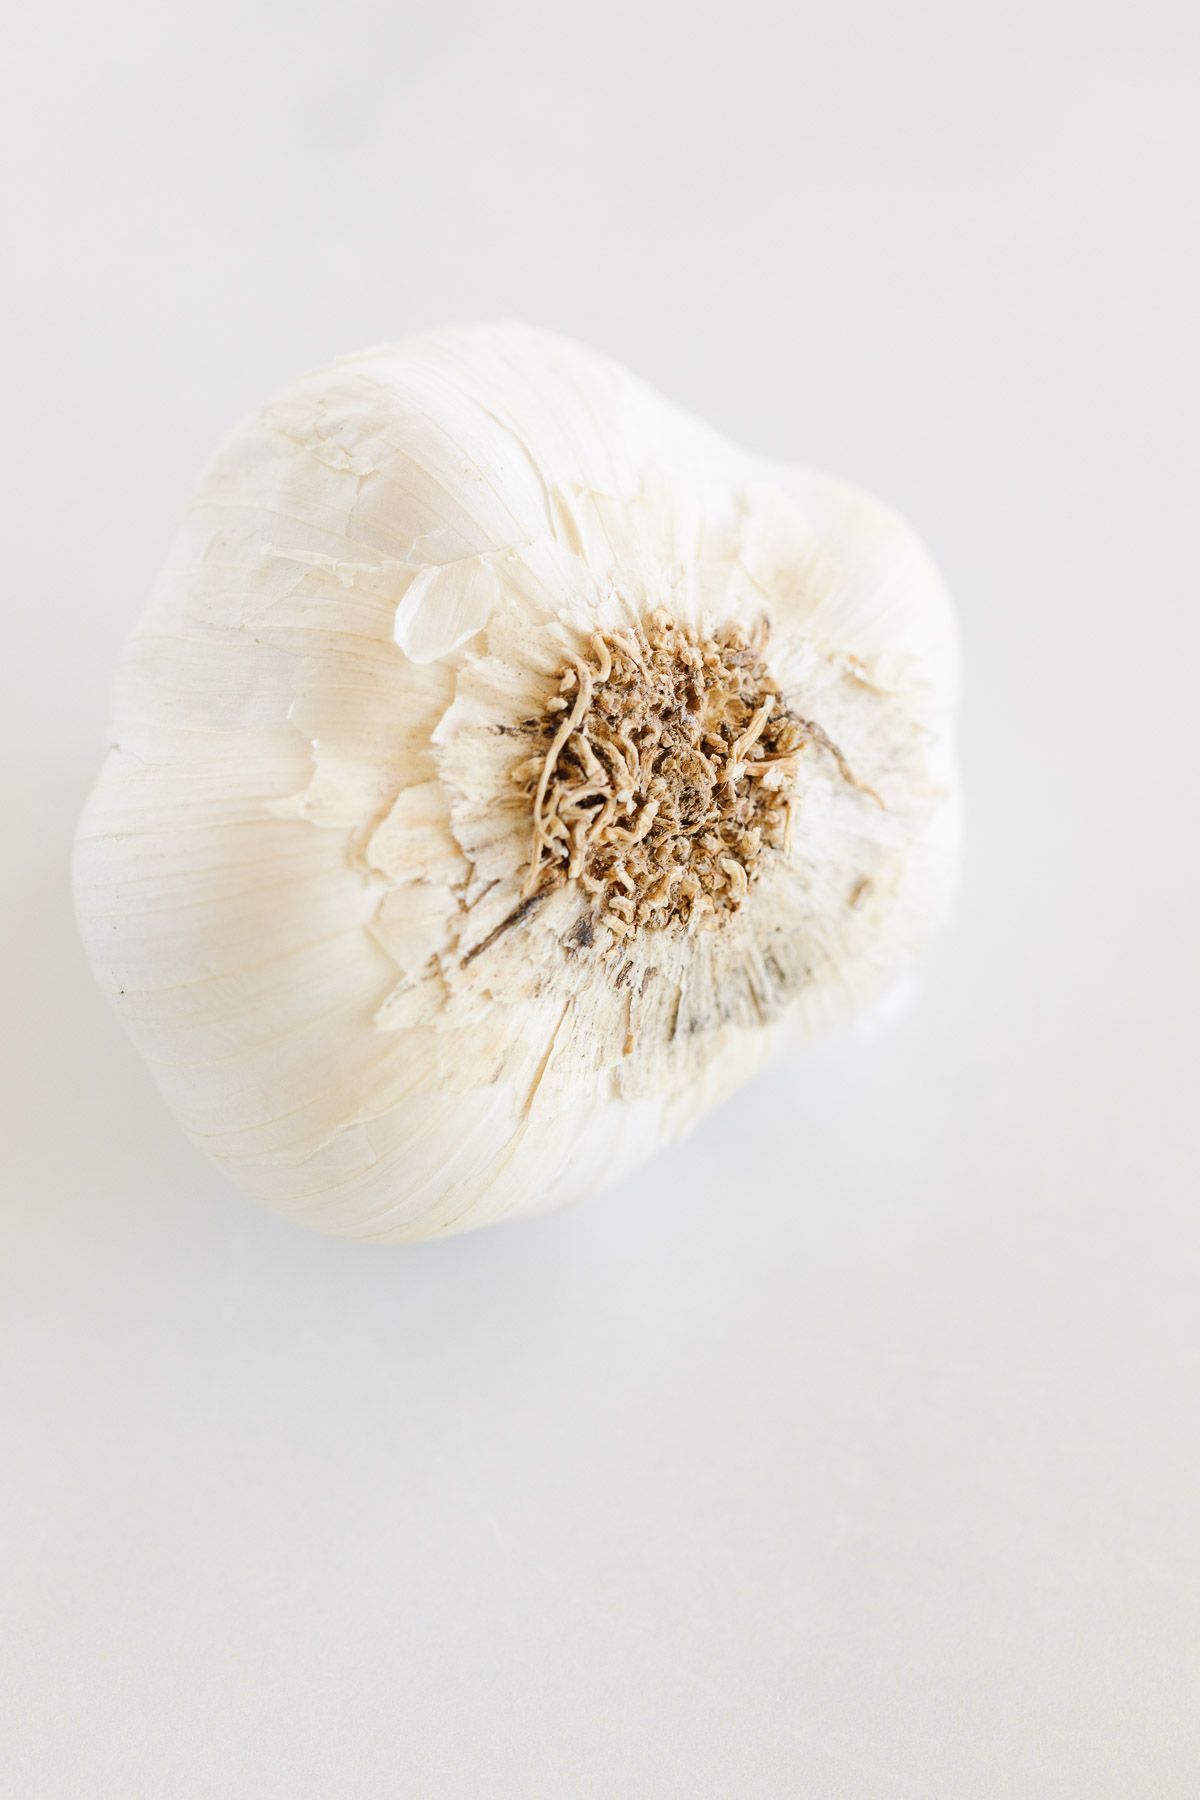 A clove of garlic on a marble countertop.